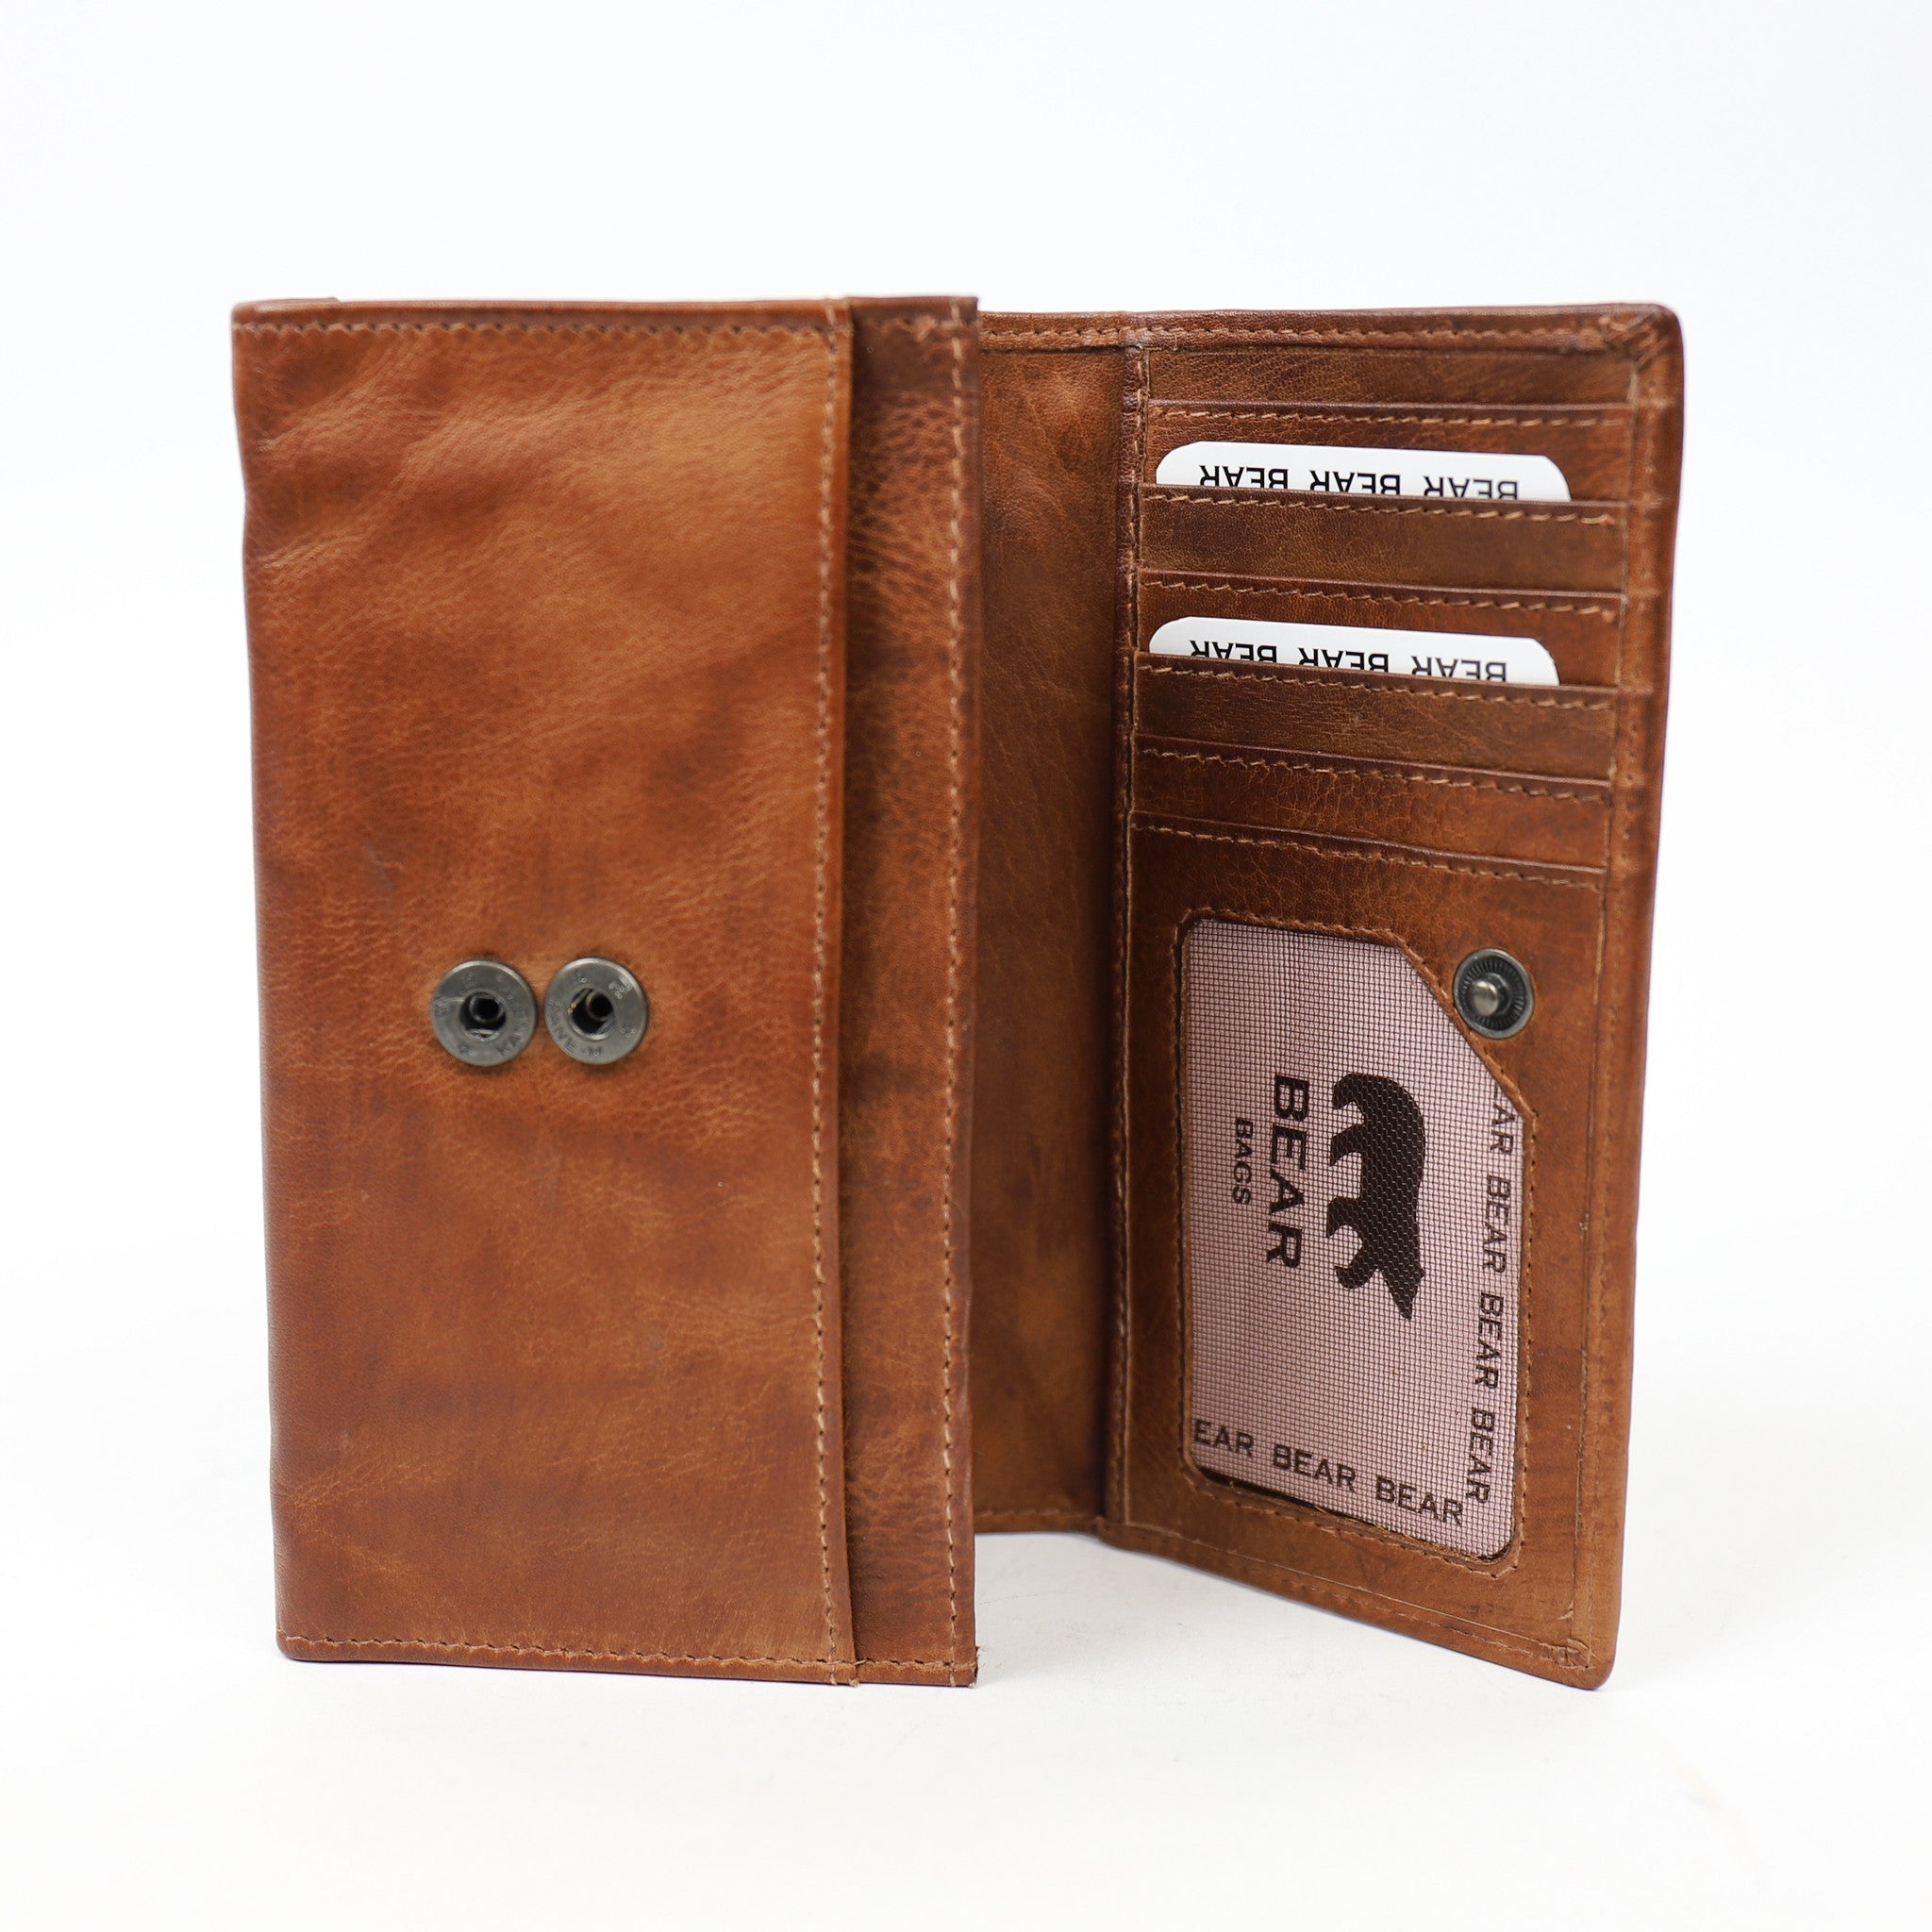 Wrap wallet 'Sweety' XL cognac - CP 6041